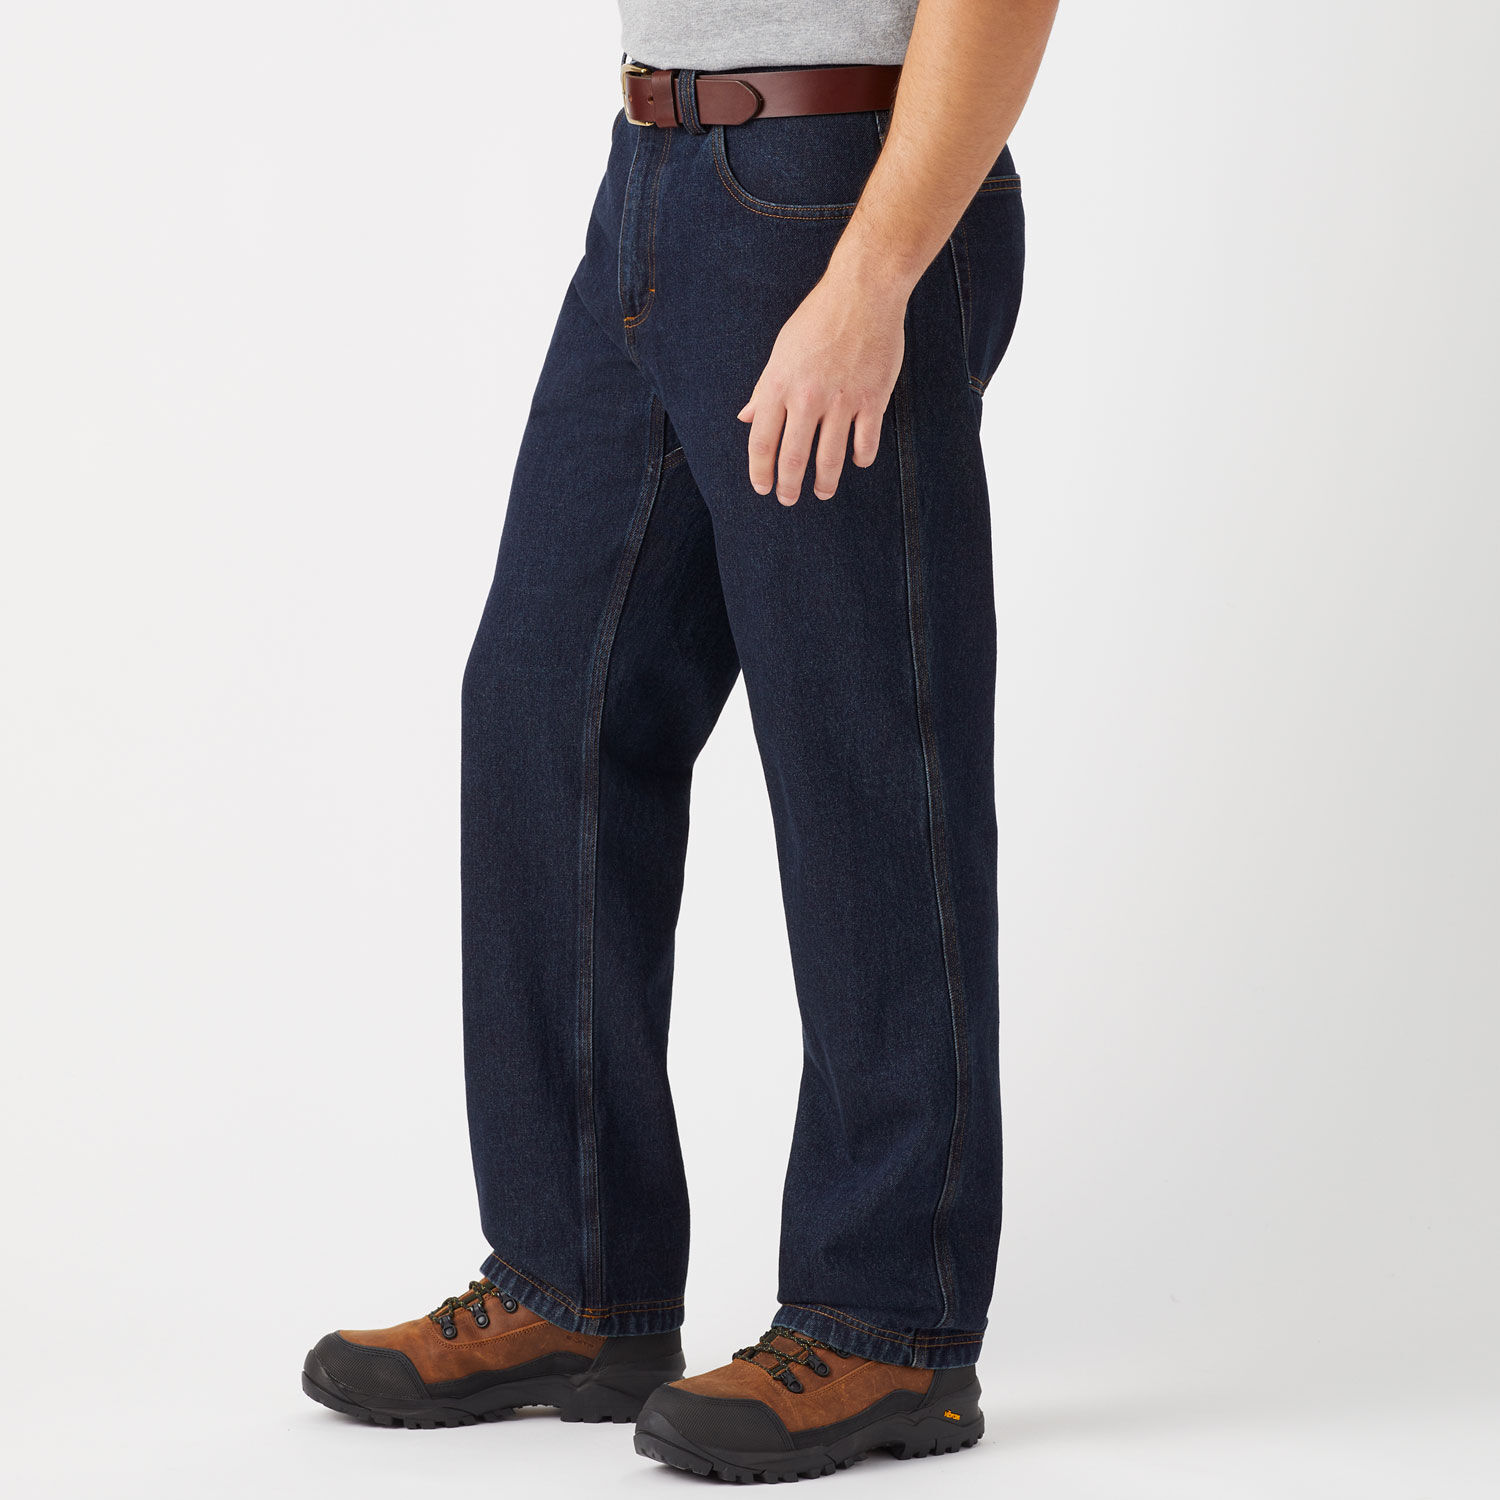 Navy Solid Full Length Casual Men Regular Fit Jeans - Selling Fast at  Pantaloons.com